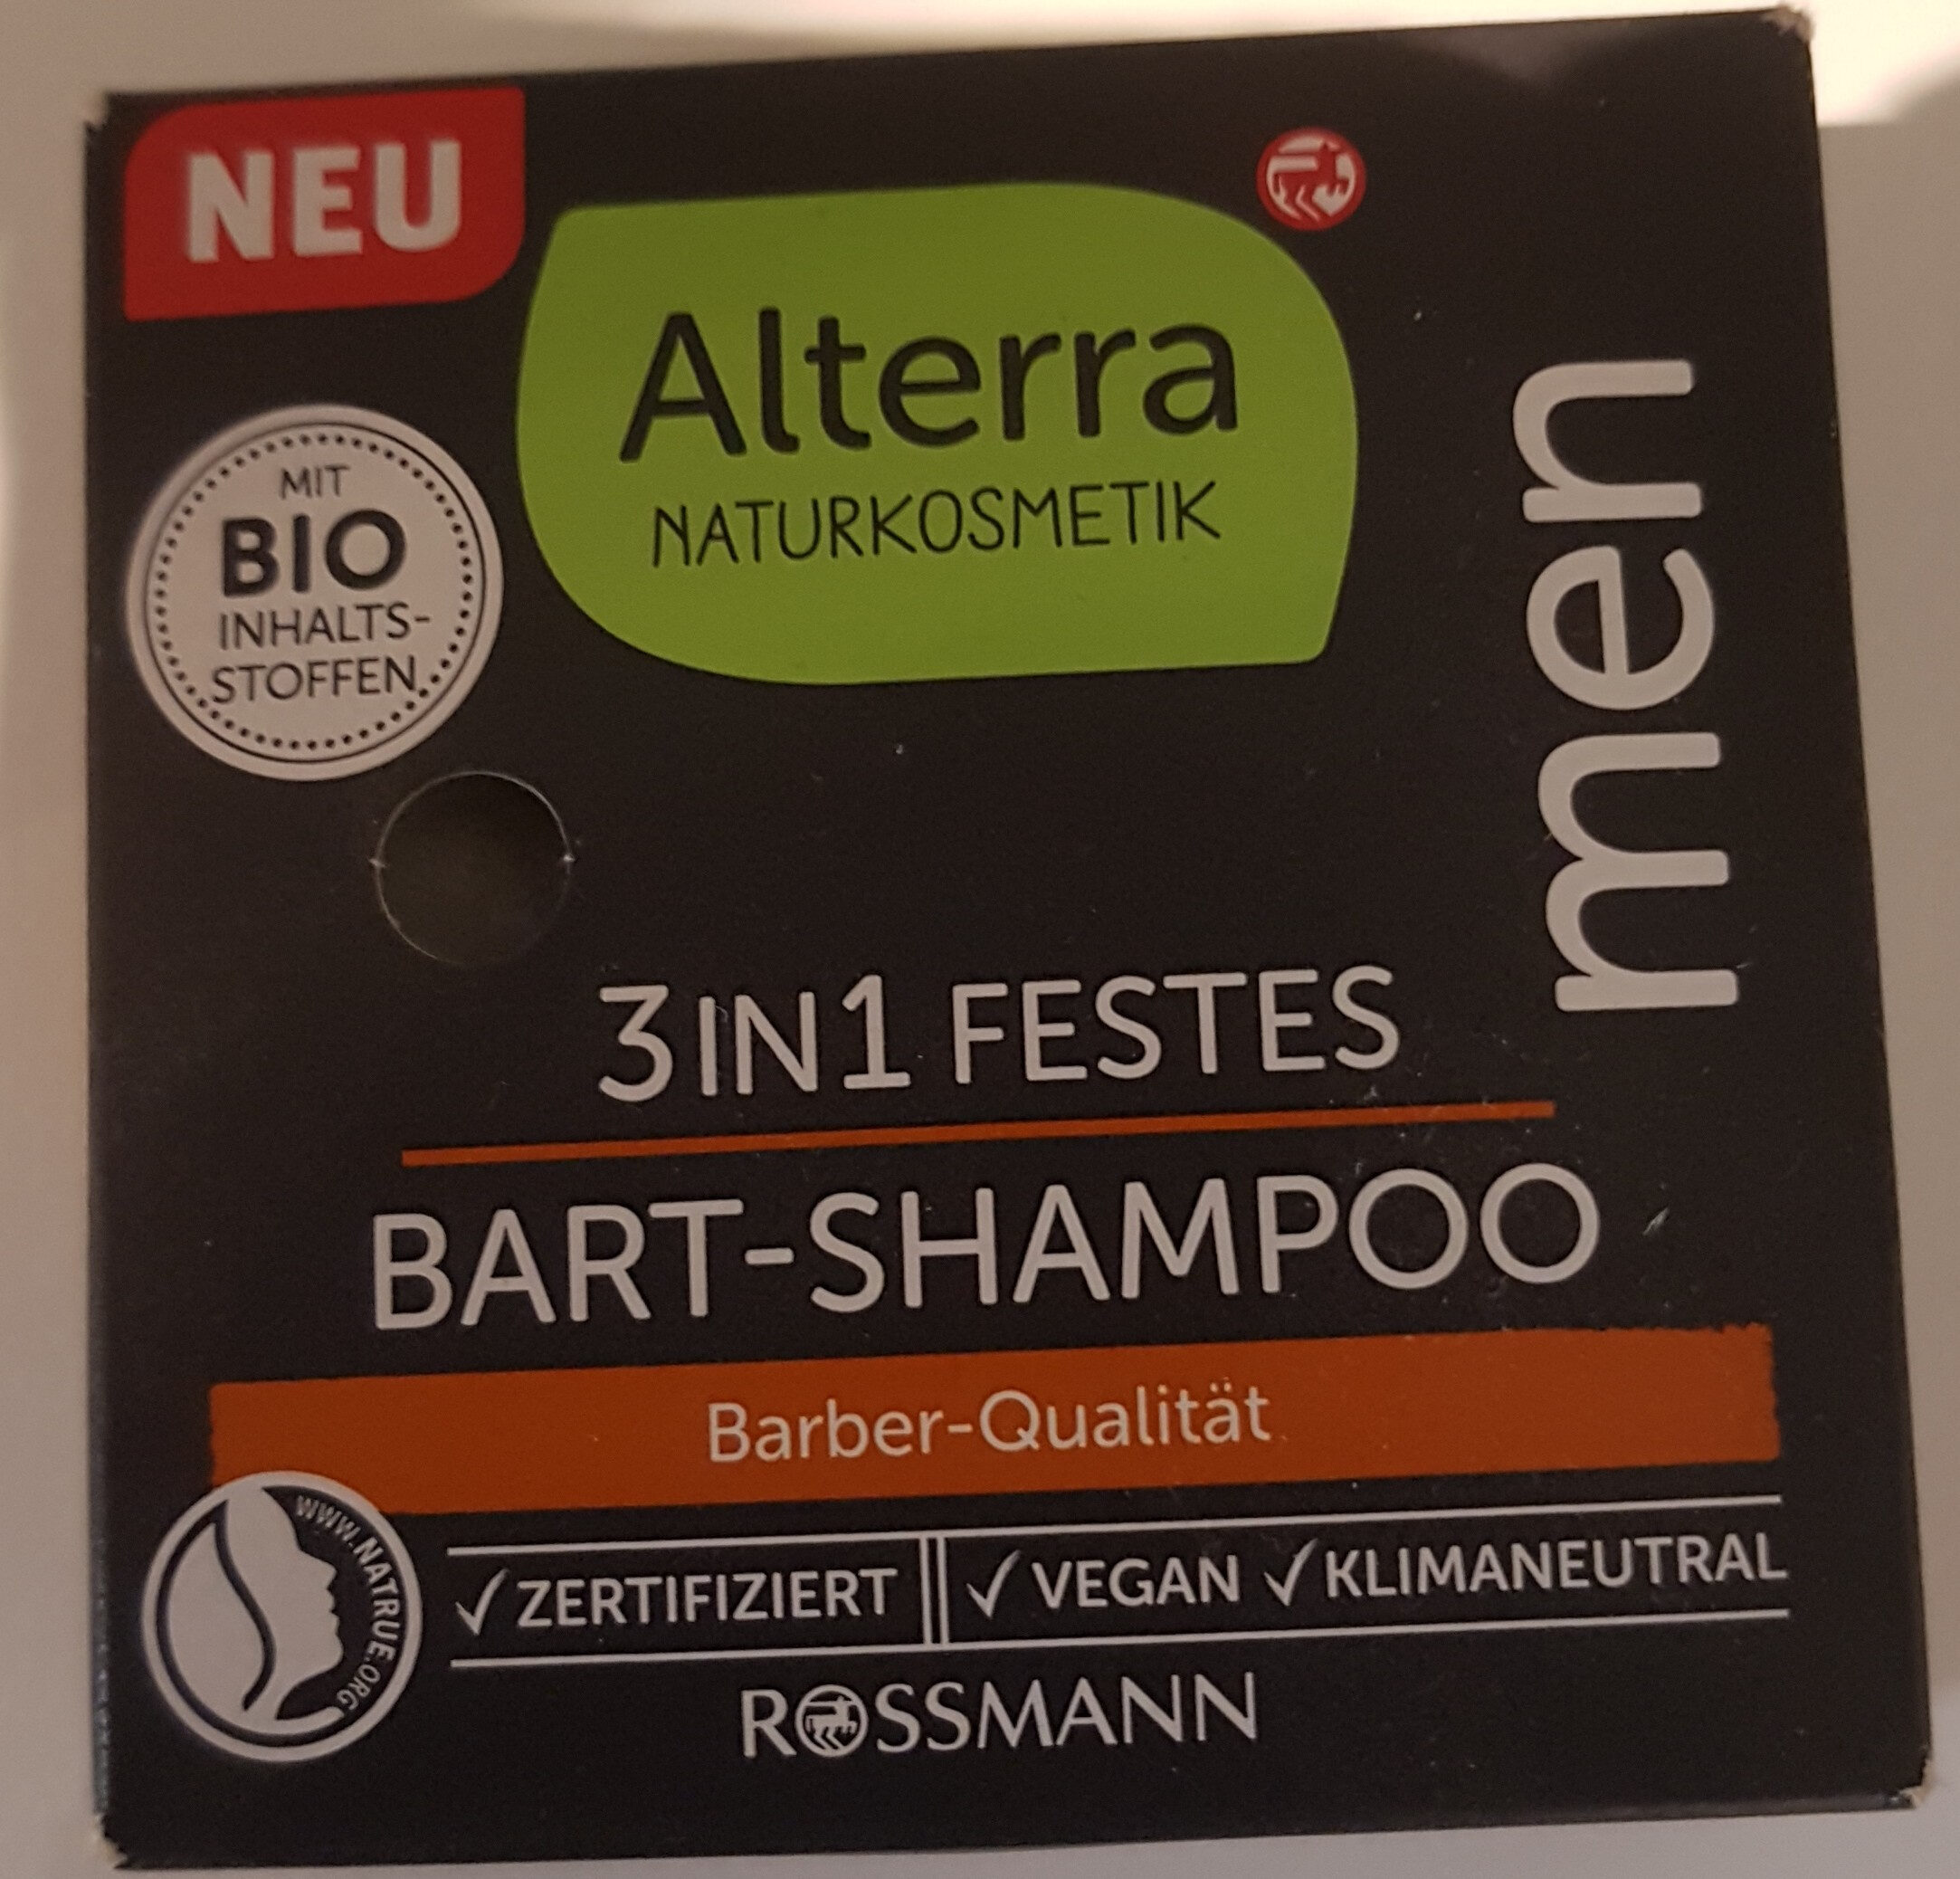 Alterra 3in1 festes Bart-Shampoo - Produkt - de